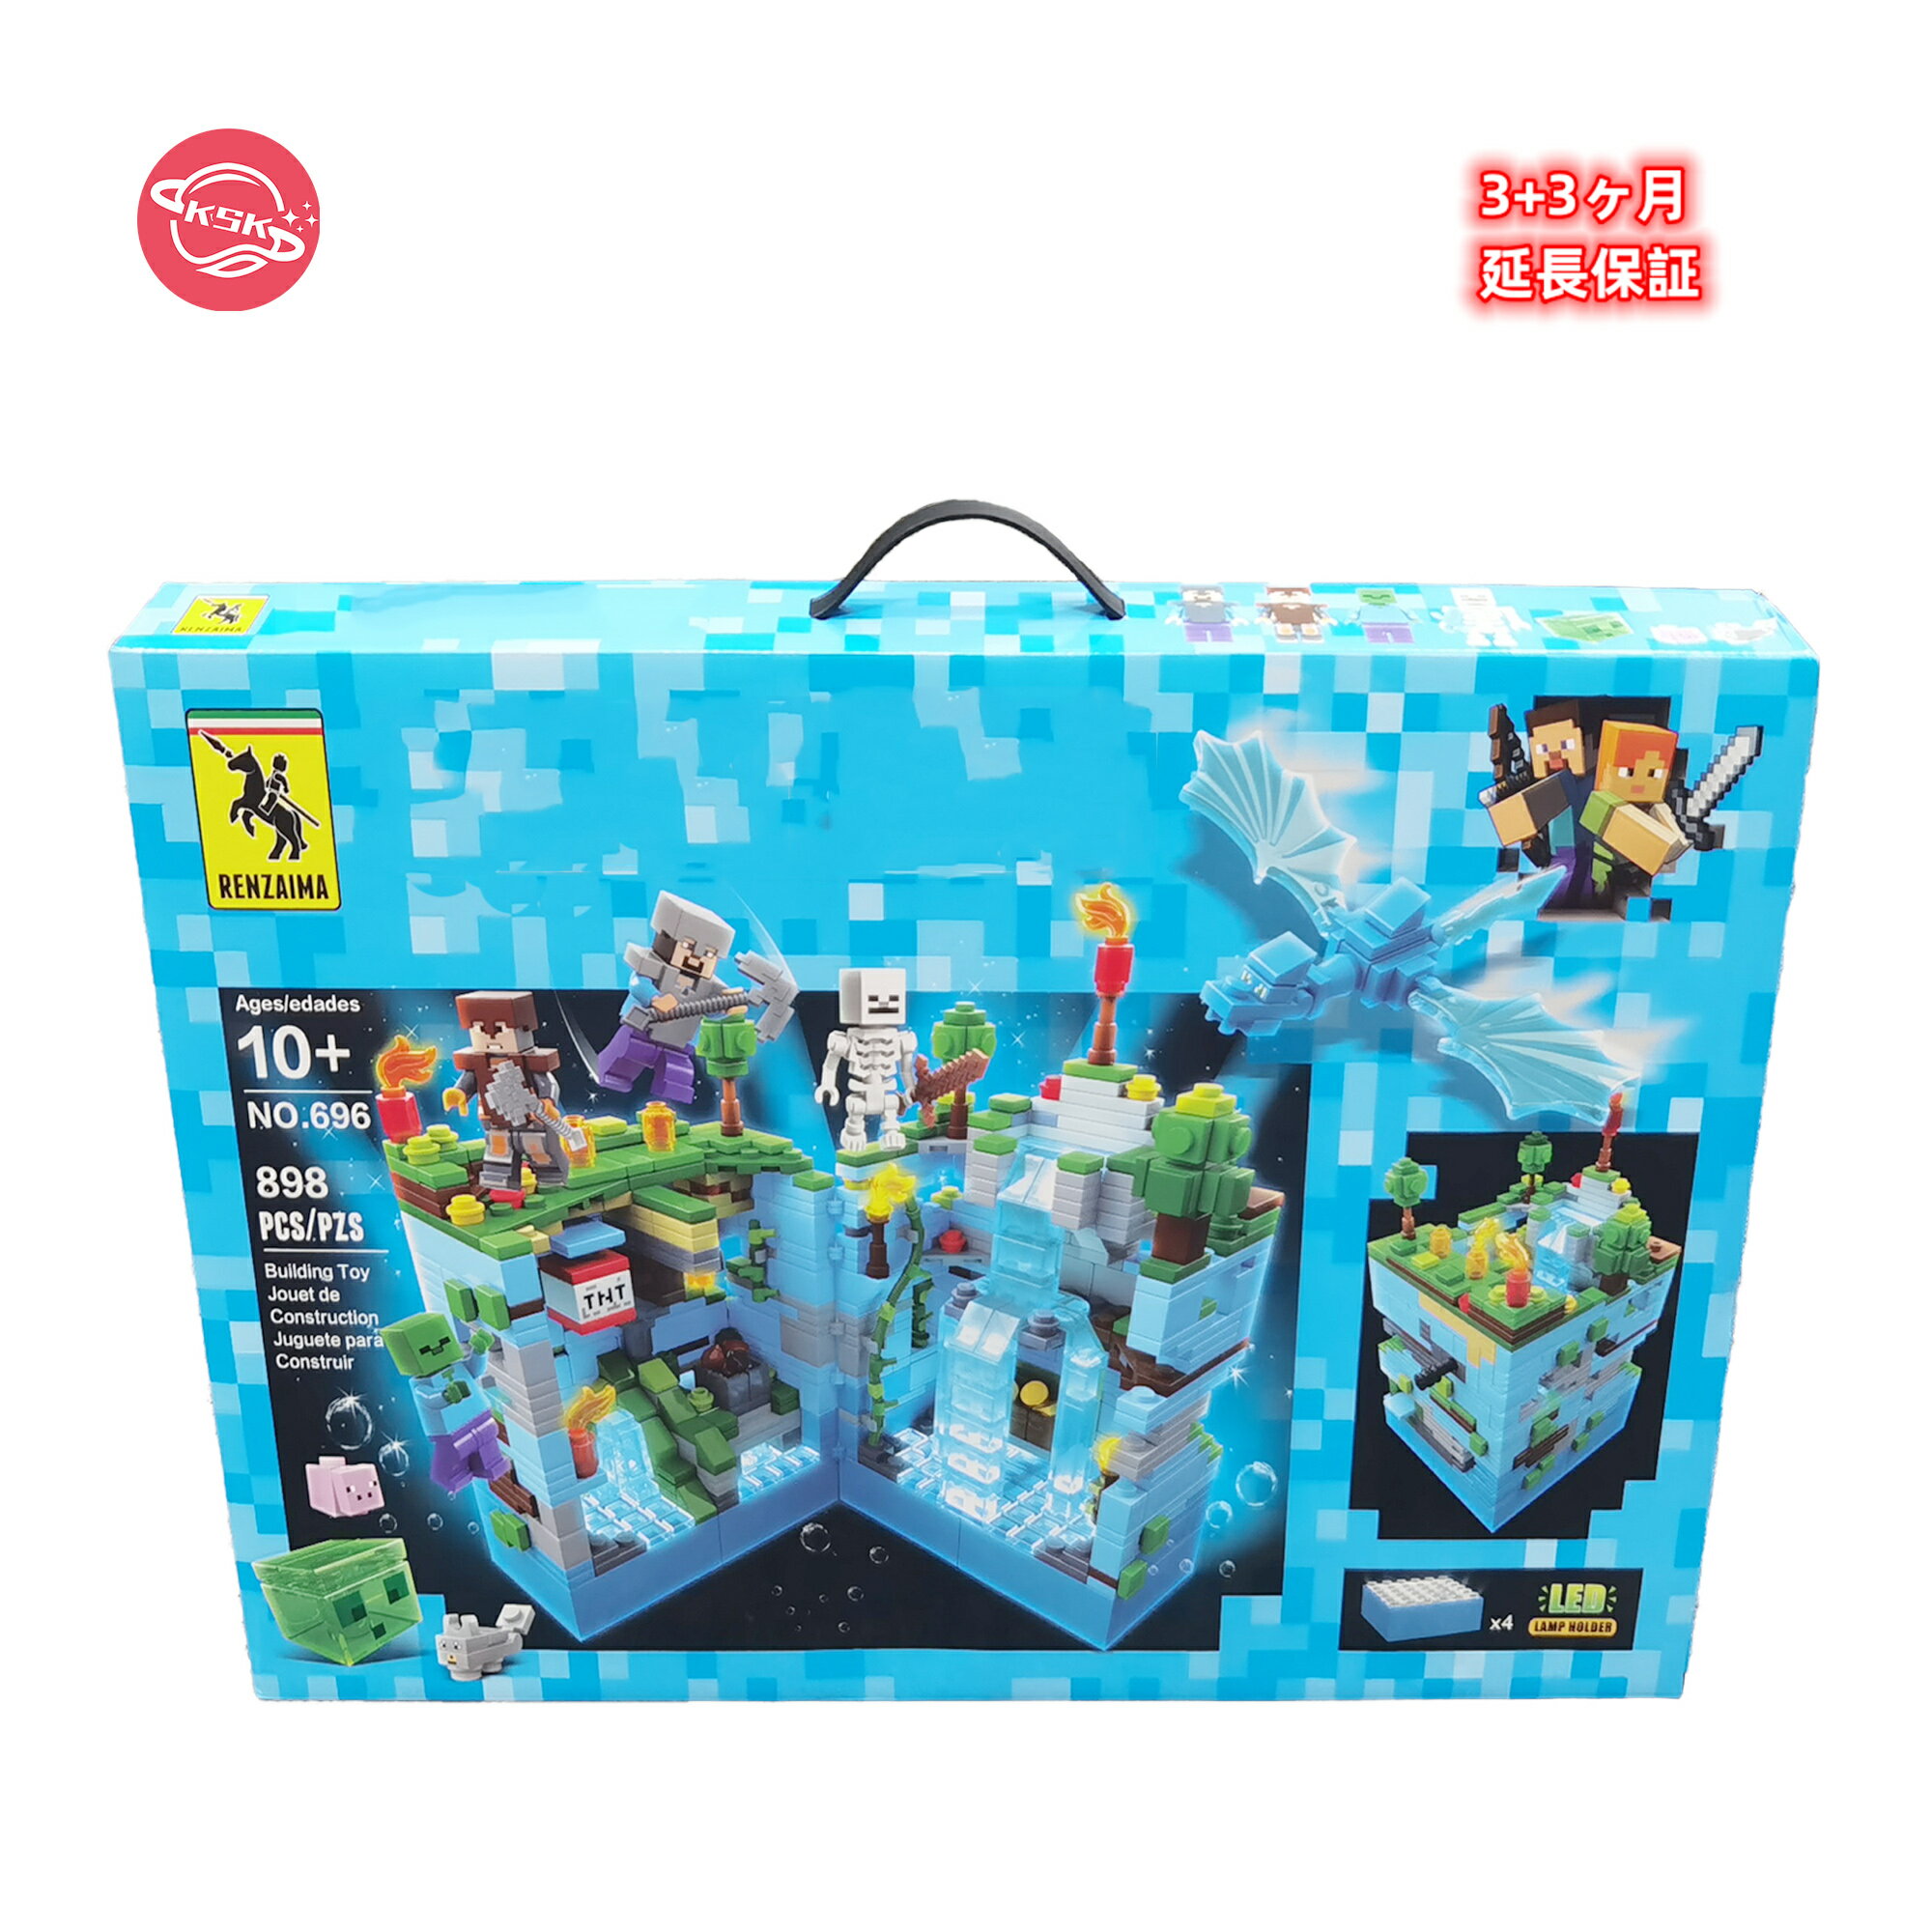 [KSK] LEGO互換 レゴ互換 海底の城 898ブロック 4+3体ミニフィギュア [カラーボックス包装] マインクラフト互換 マインクラフト風 光るおもちゃ プレゼント おもちゃ 積み木 高い品質と価格の比率 対象年齢6才以上 送料無料 90＋90日品質保証